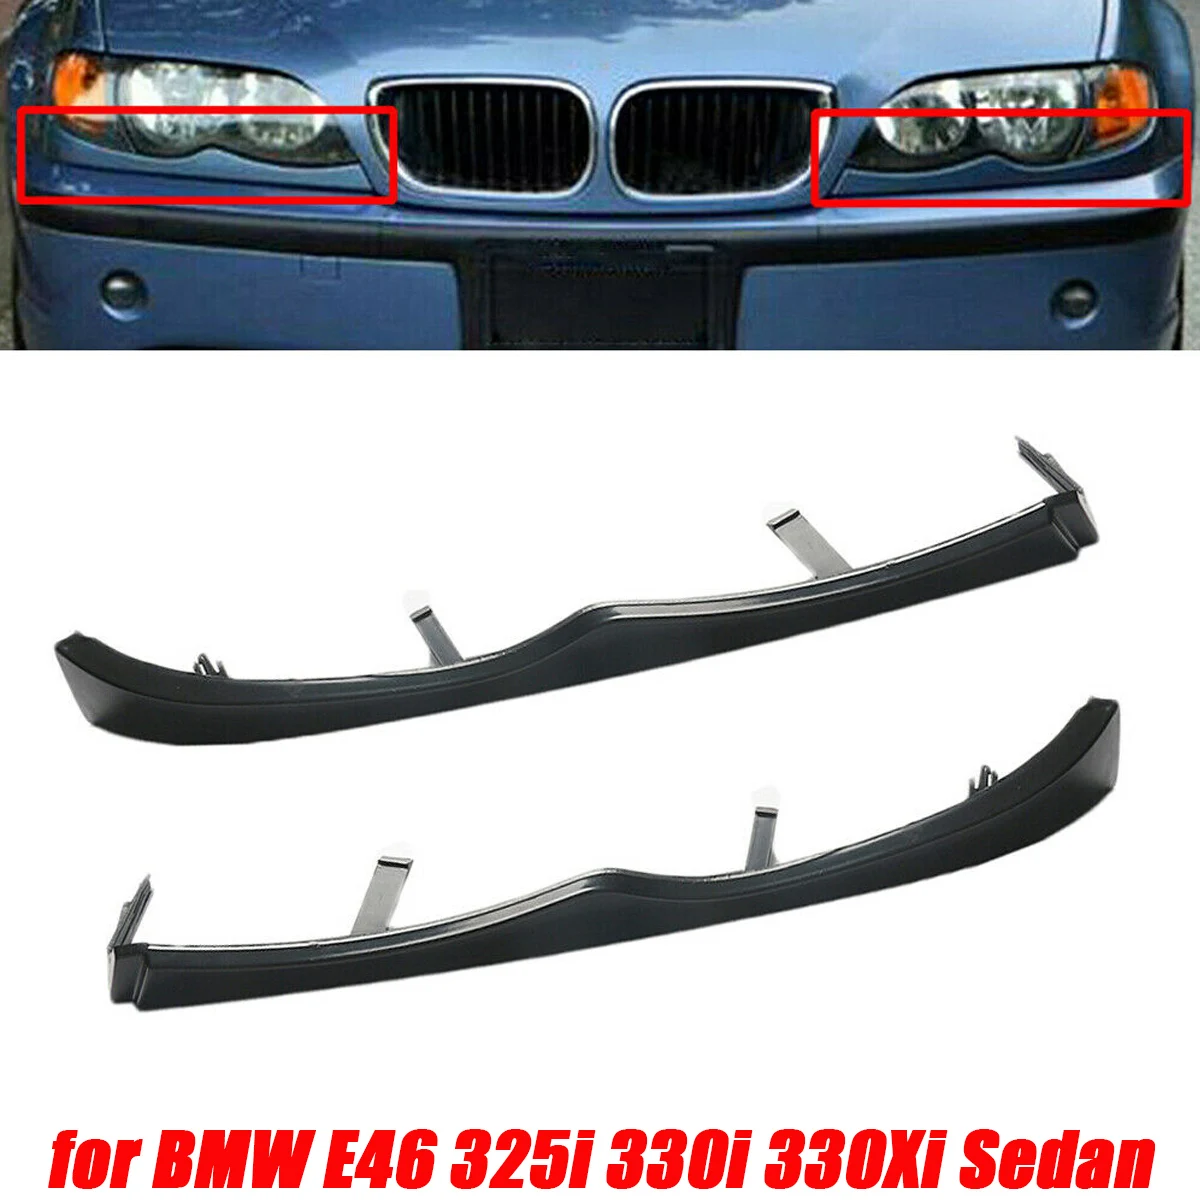 For BMW E46 Headlight Eyebrow Lower Headlamp Eyelid Cover Trim 330i 330Xi 325i 2001-2005 51137043410 51137043409 Car Accessories